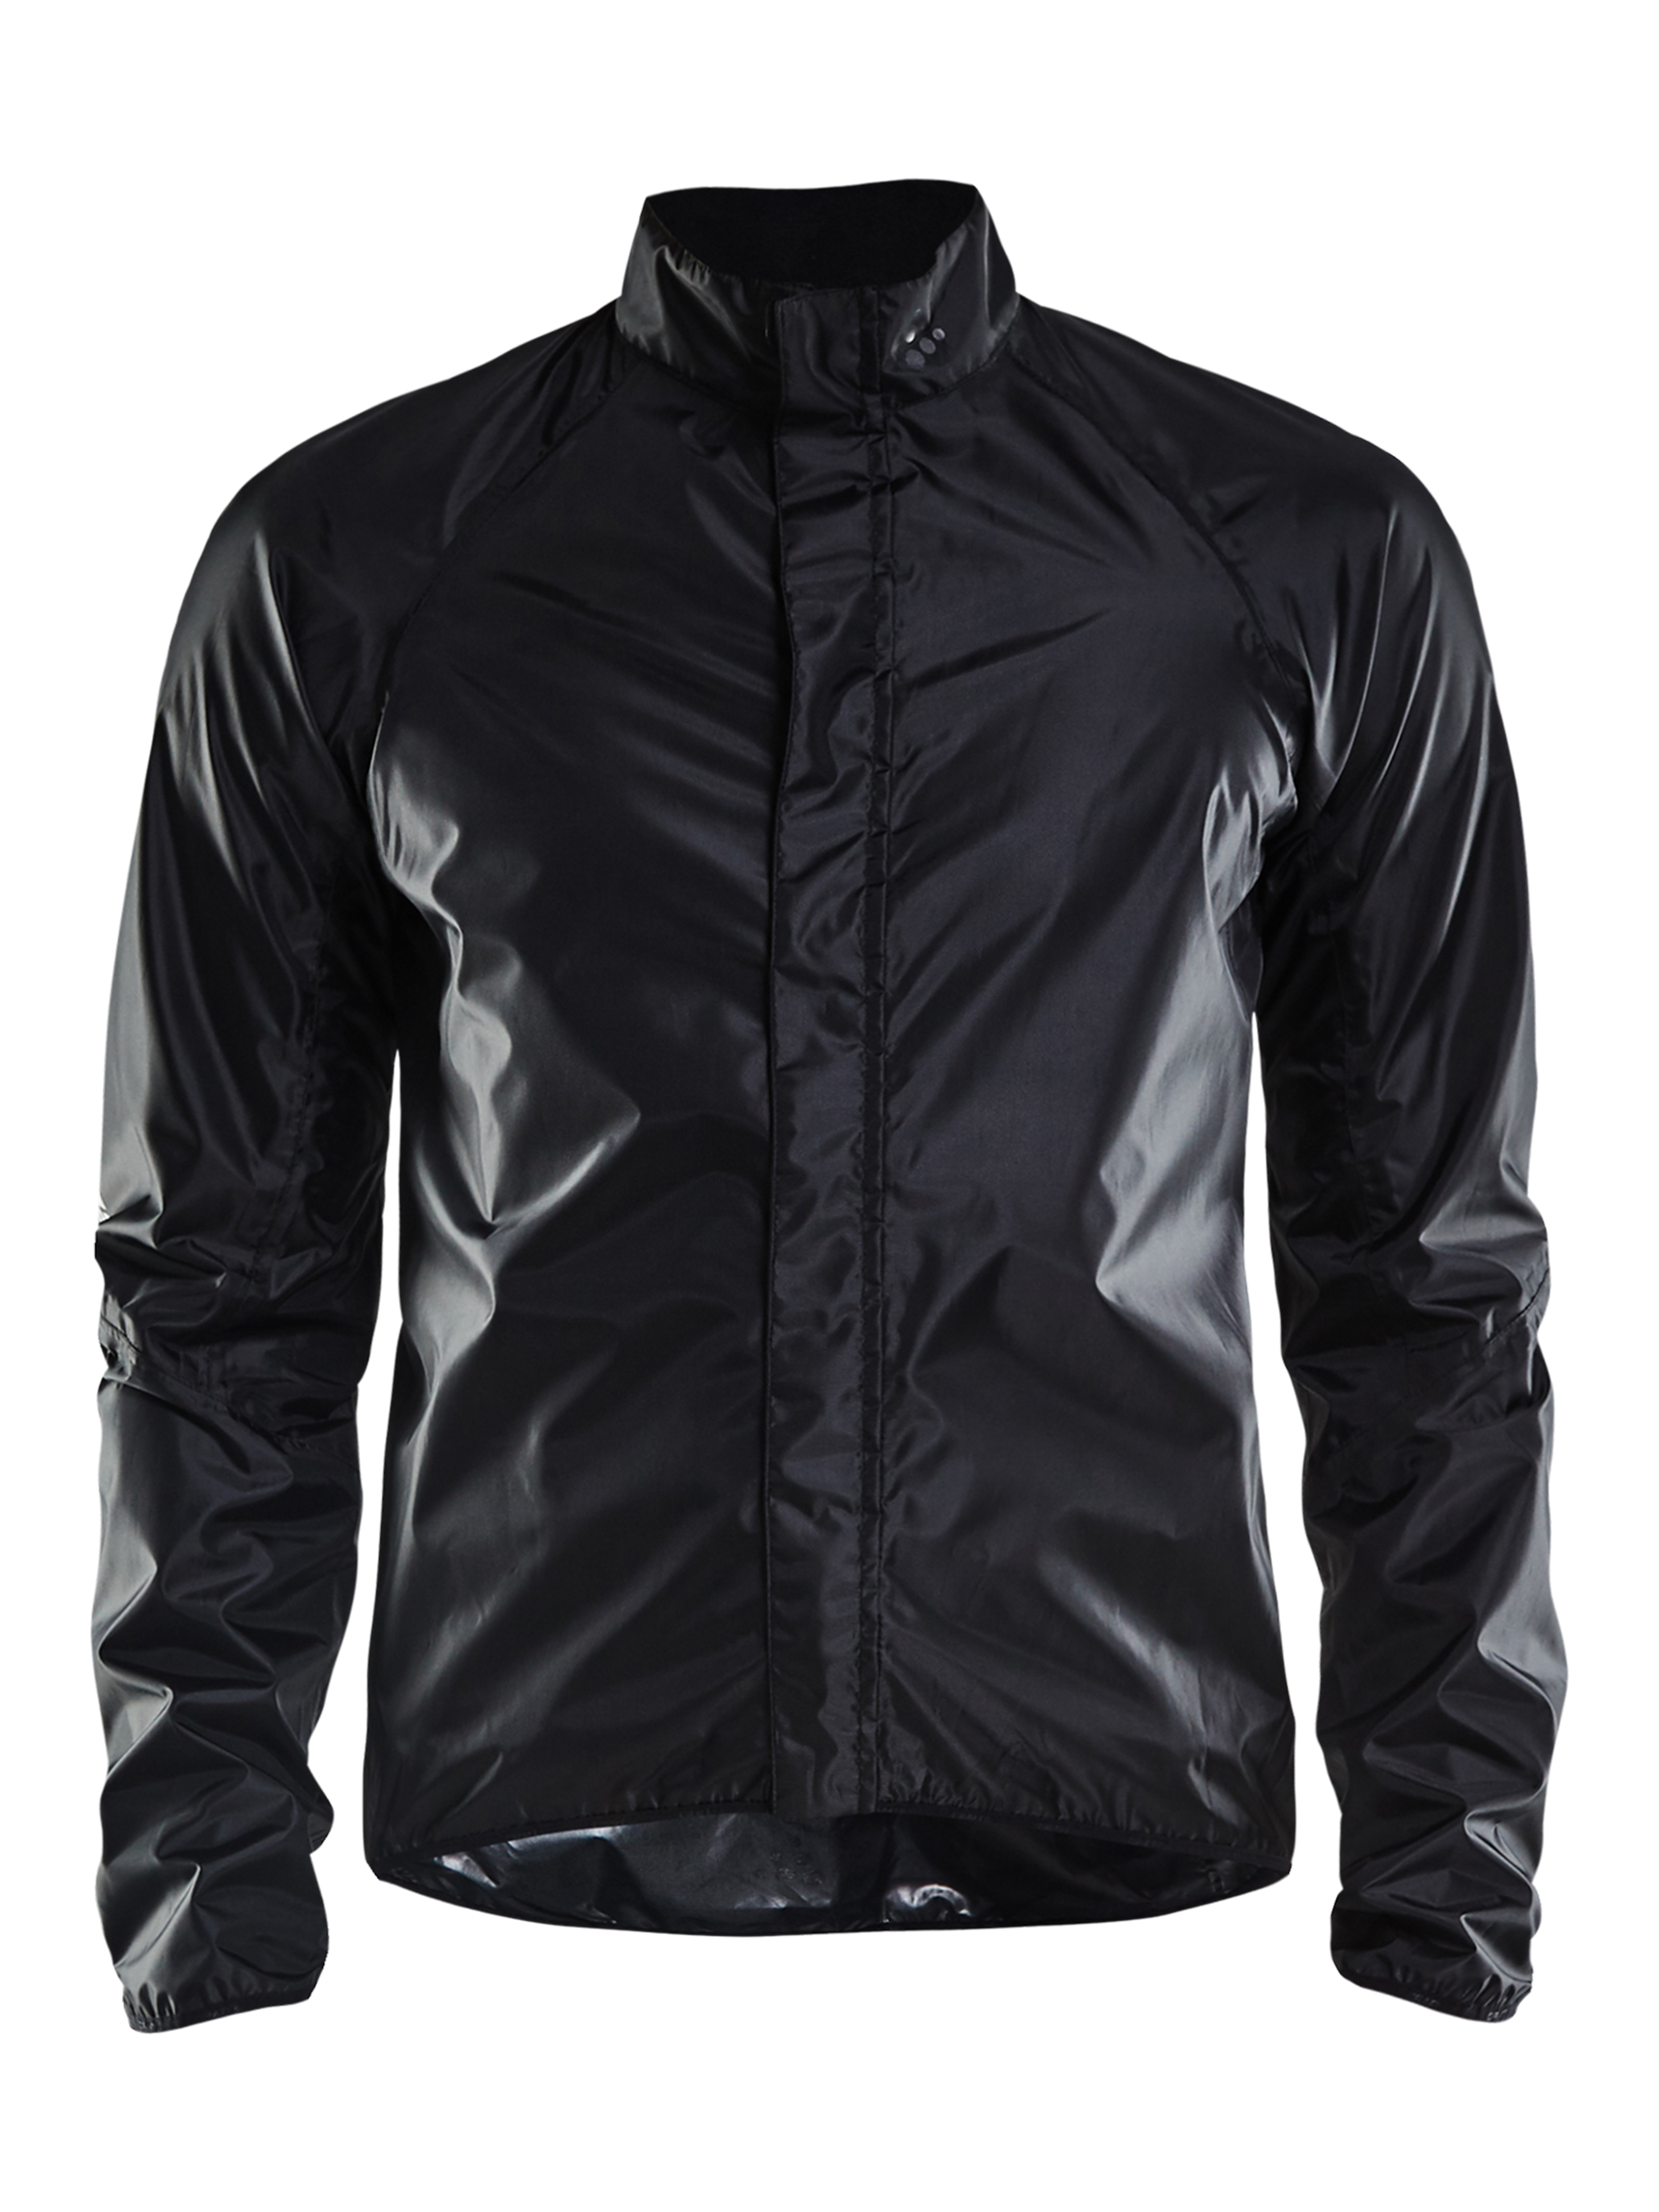 Mist Rain Jacket M - Black | Craft Sportswear